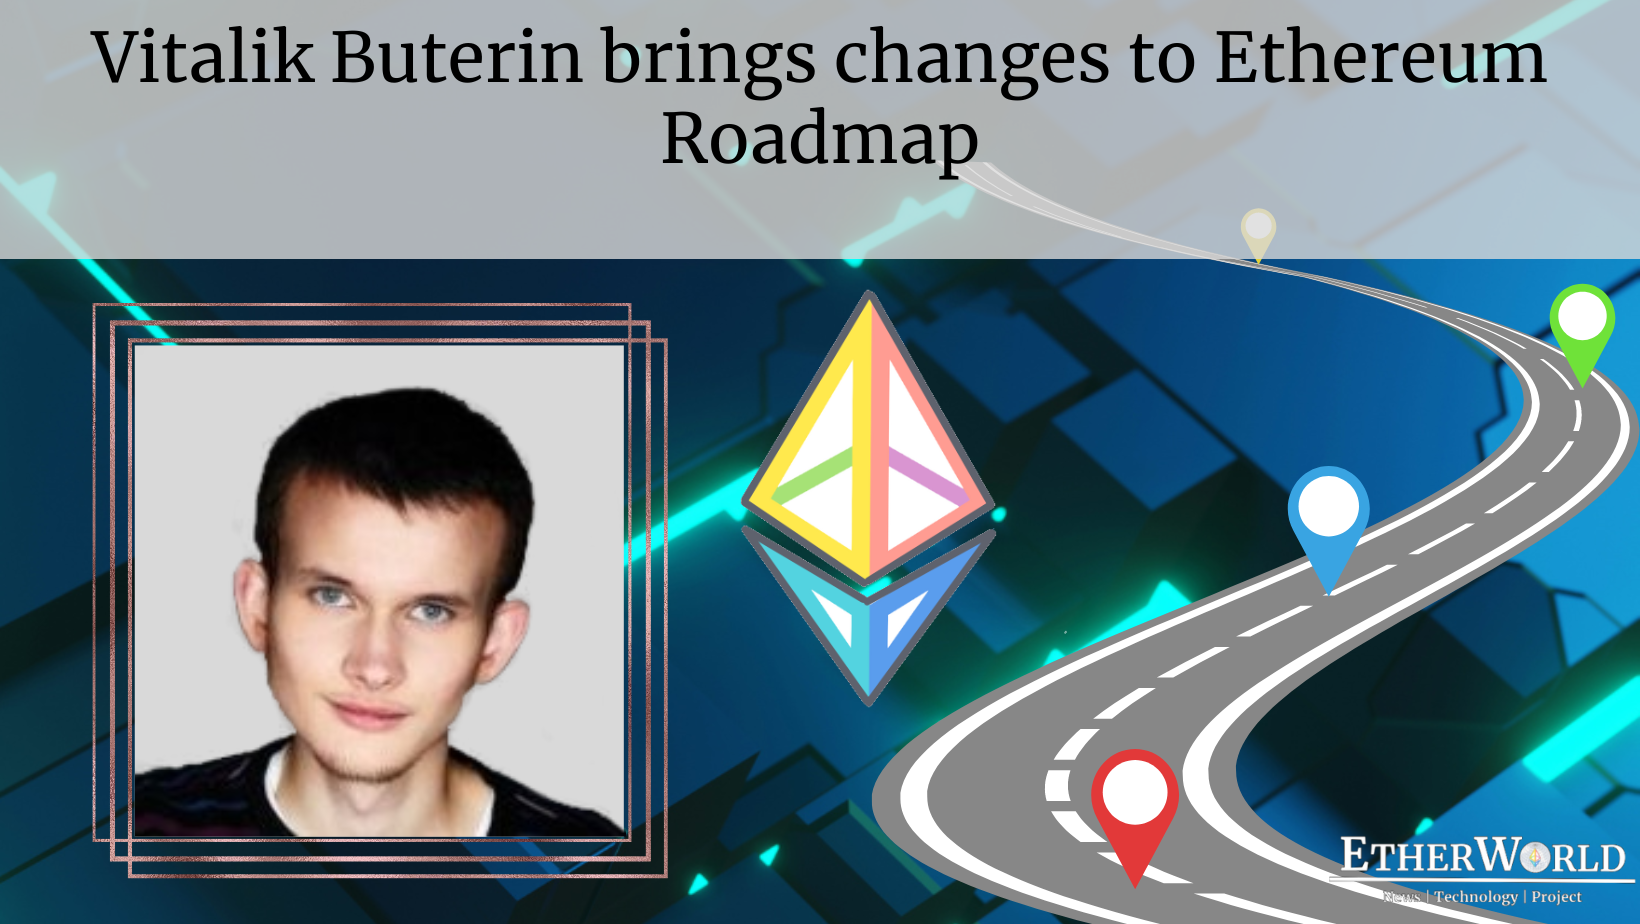 Vitalik Buterin brings changes to Ethereum Roadmap